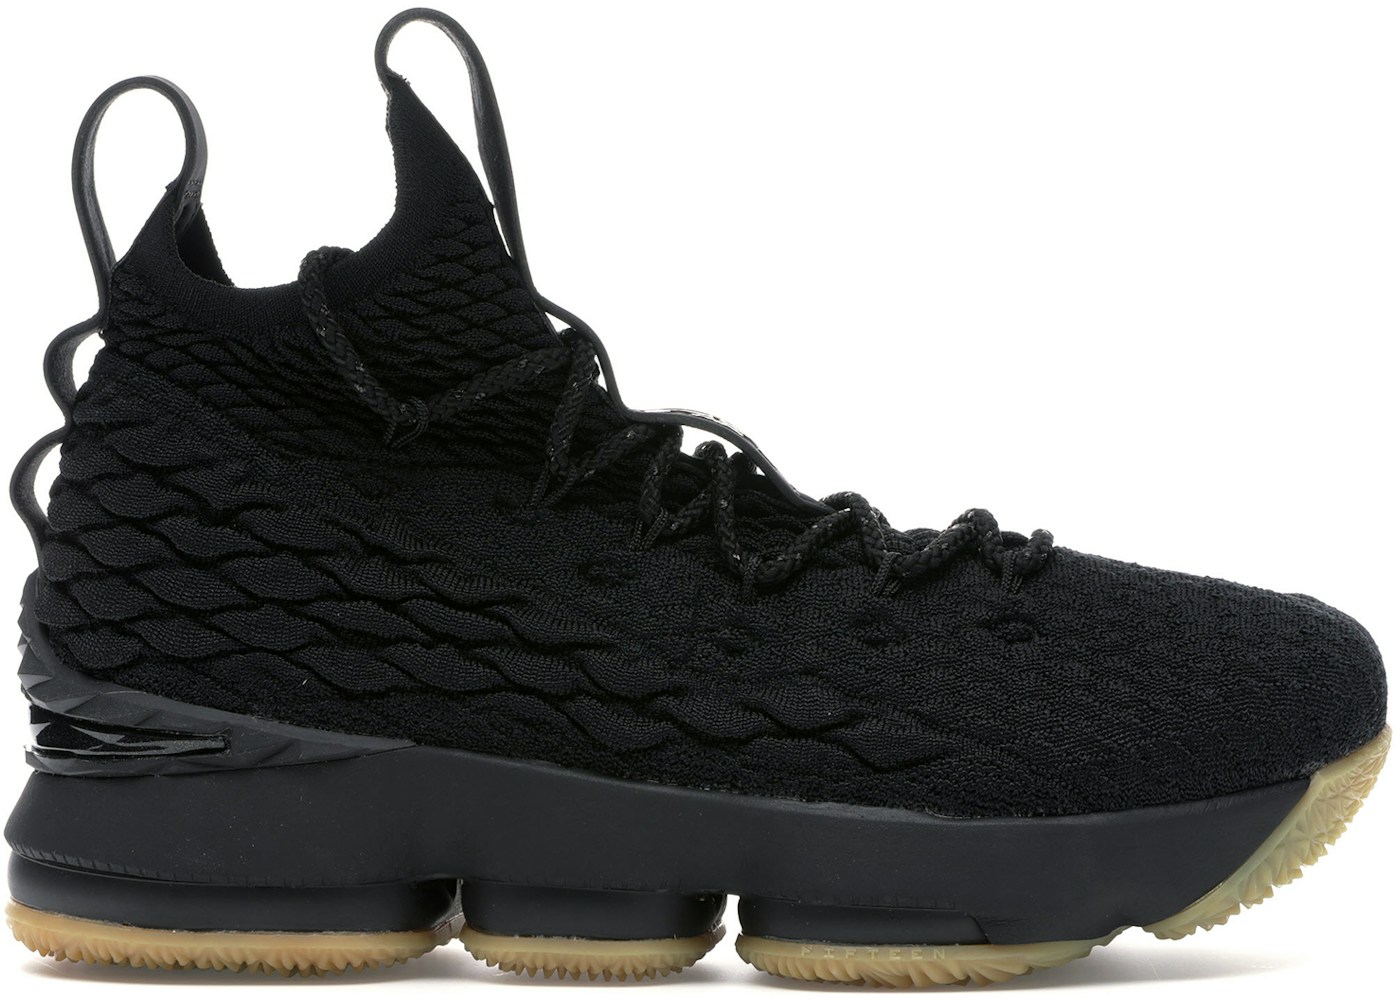 Nike LeBron 15 Black Gum (GS) - 922811-001